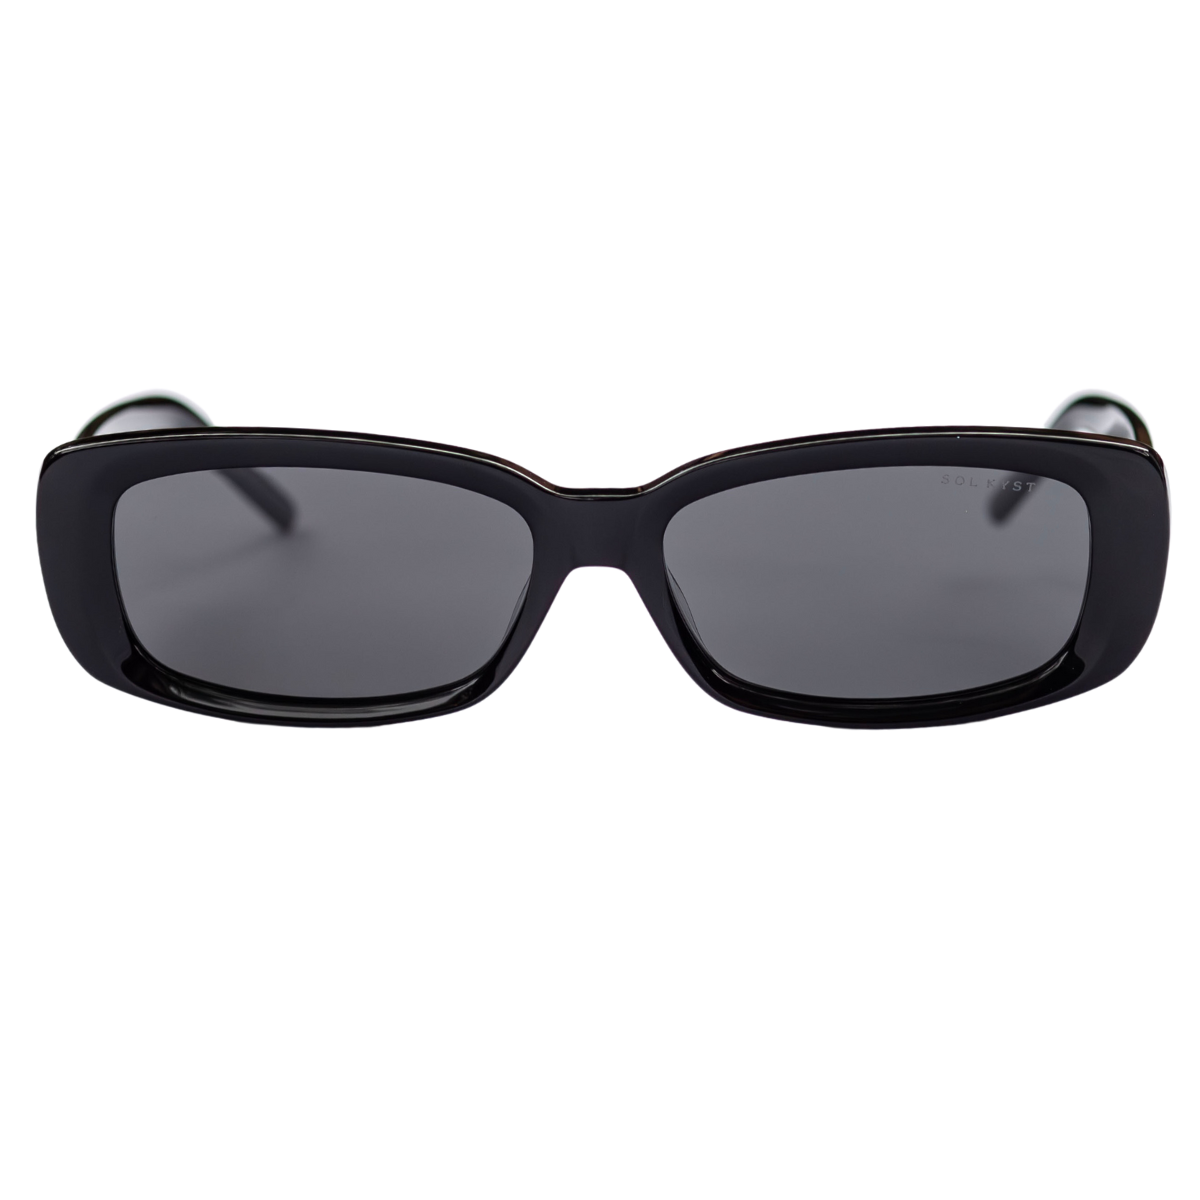 sunglasses, rectangle silhouette, black frame, black lens, wide face sunglasses